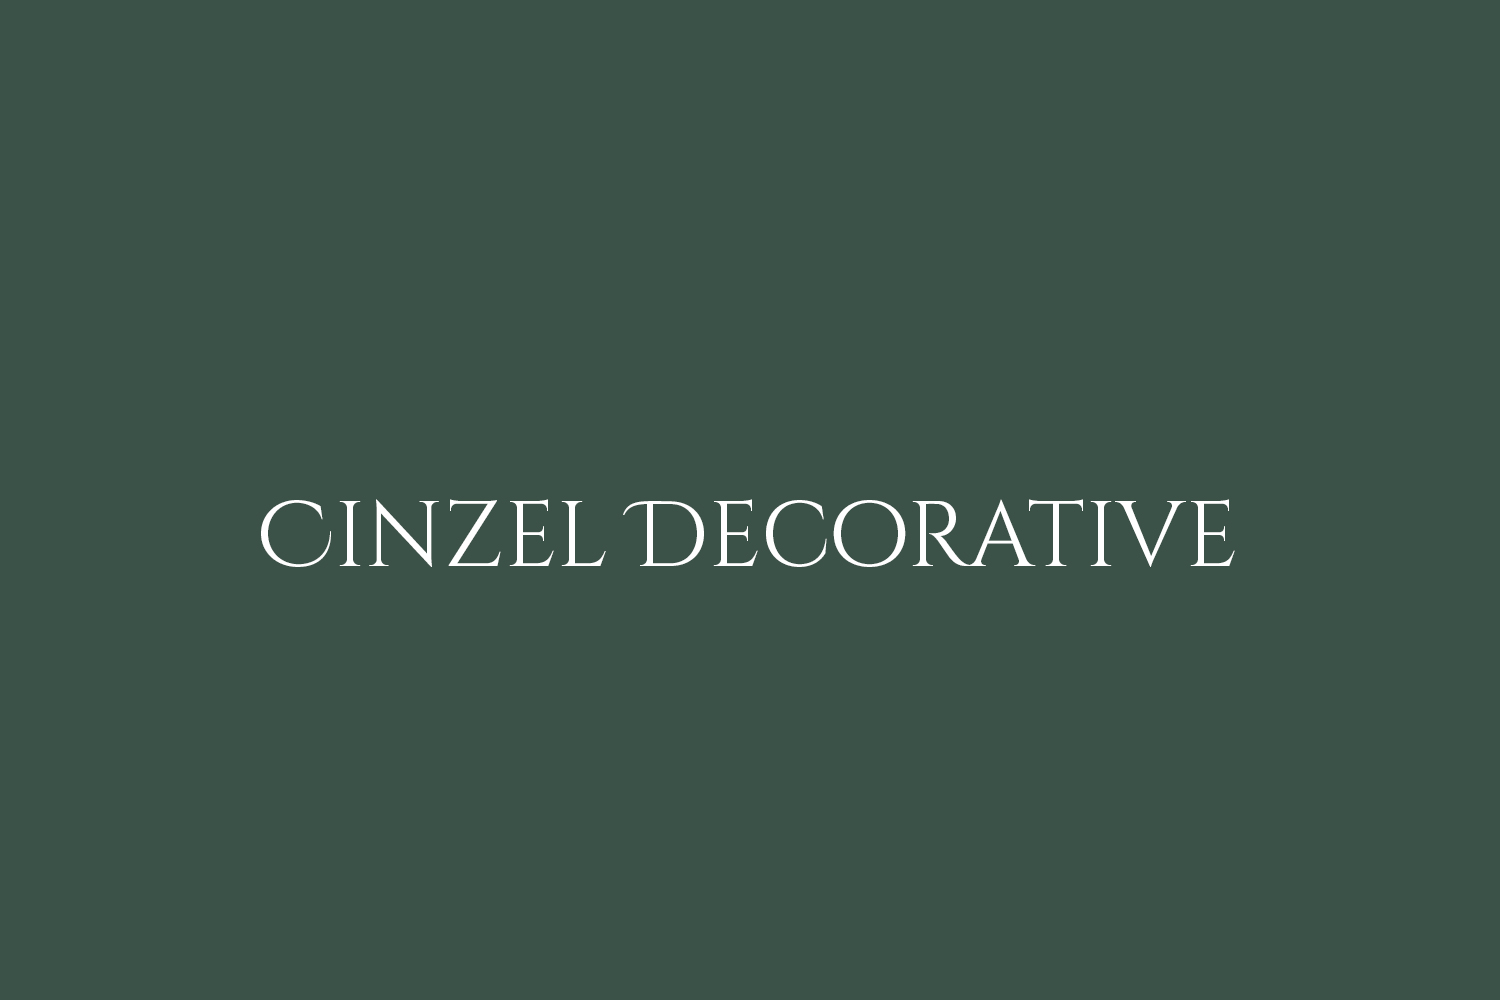 Cinzel Decorative